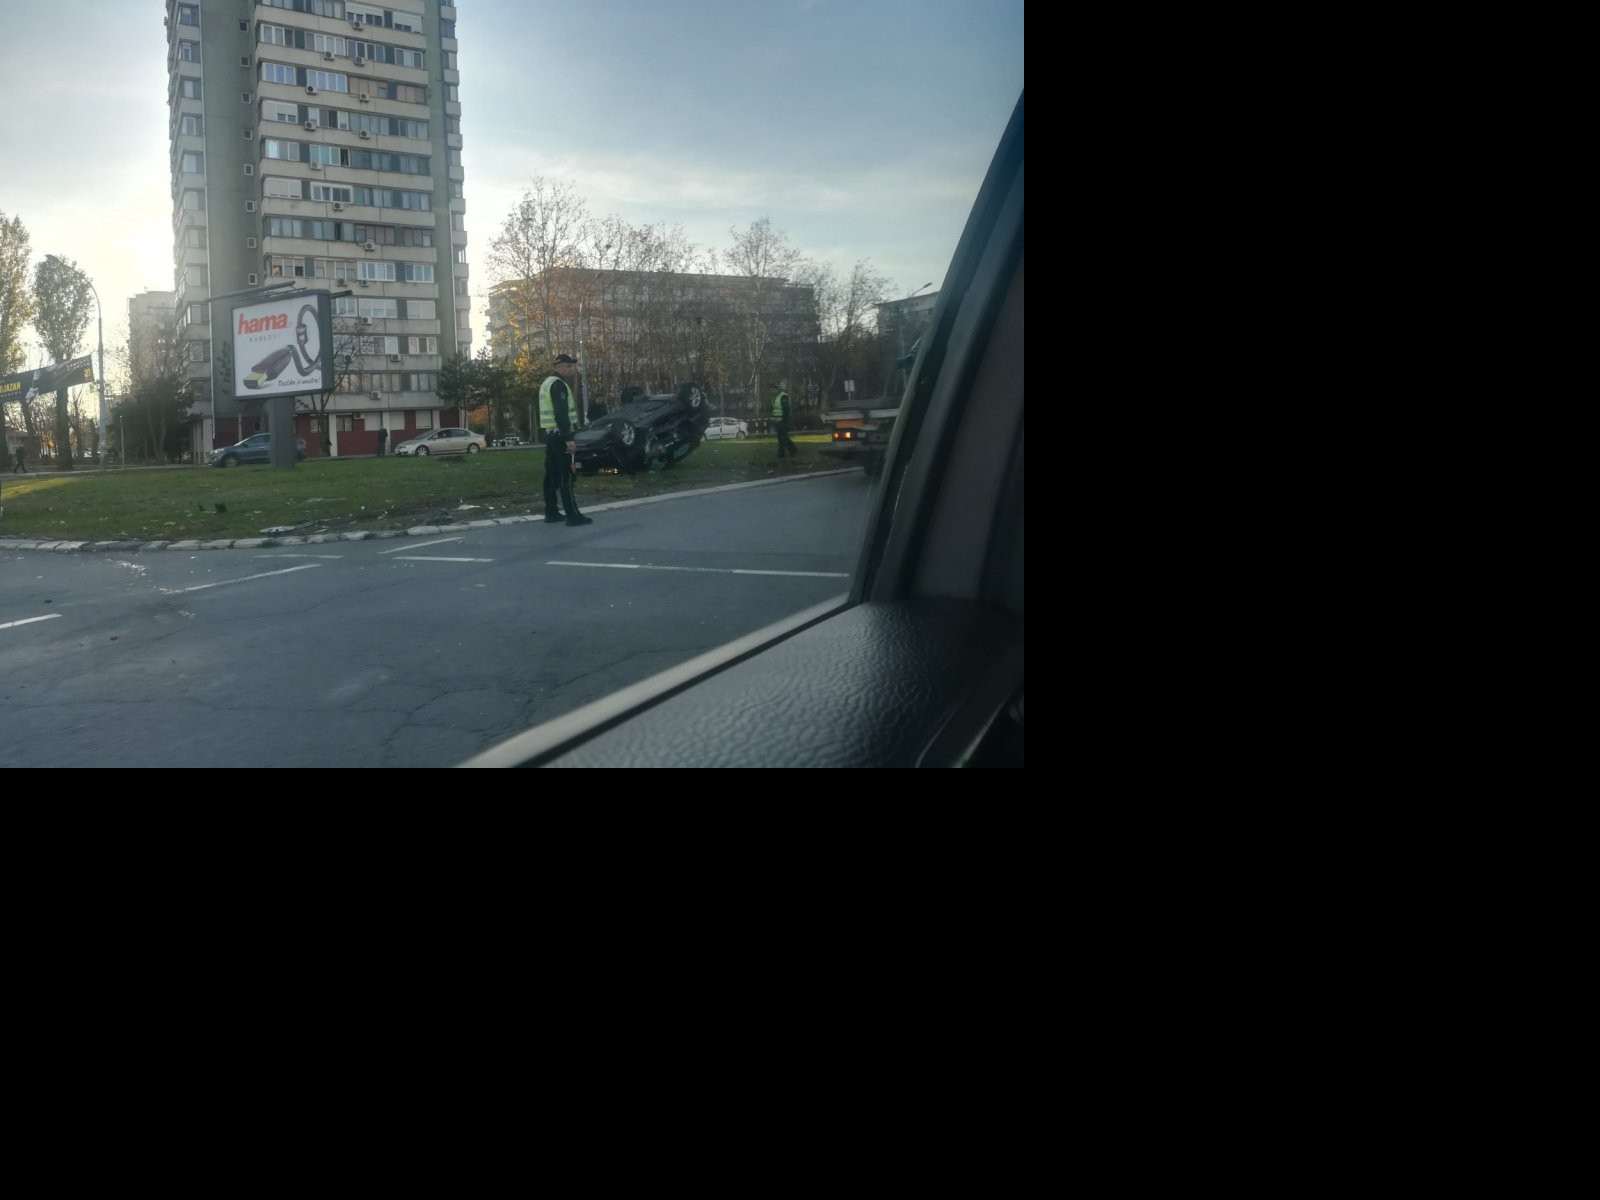 (FOTO) AUTOMOBIL SE PREVRNUO NA KROV! Saobraćajna nesreća kod opštine Novi Beograd